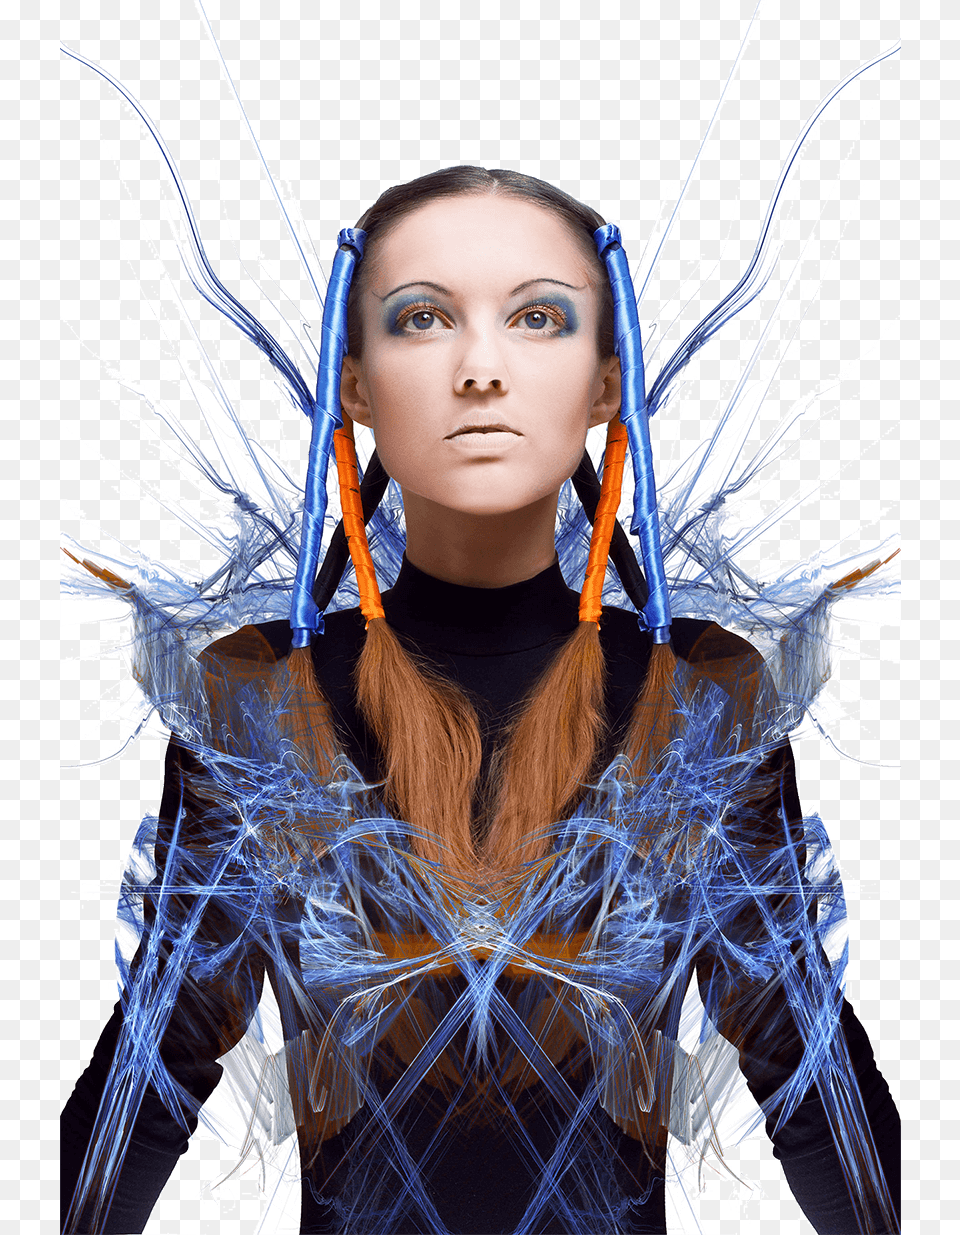 Futuristicgirl Fujifilm Membranes Transparant Background Futuristic Girl, Head, Portrait, Clothing, Costume Free Transparent Png